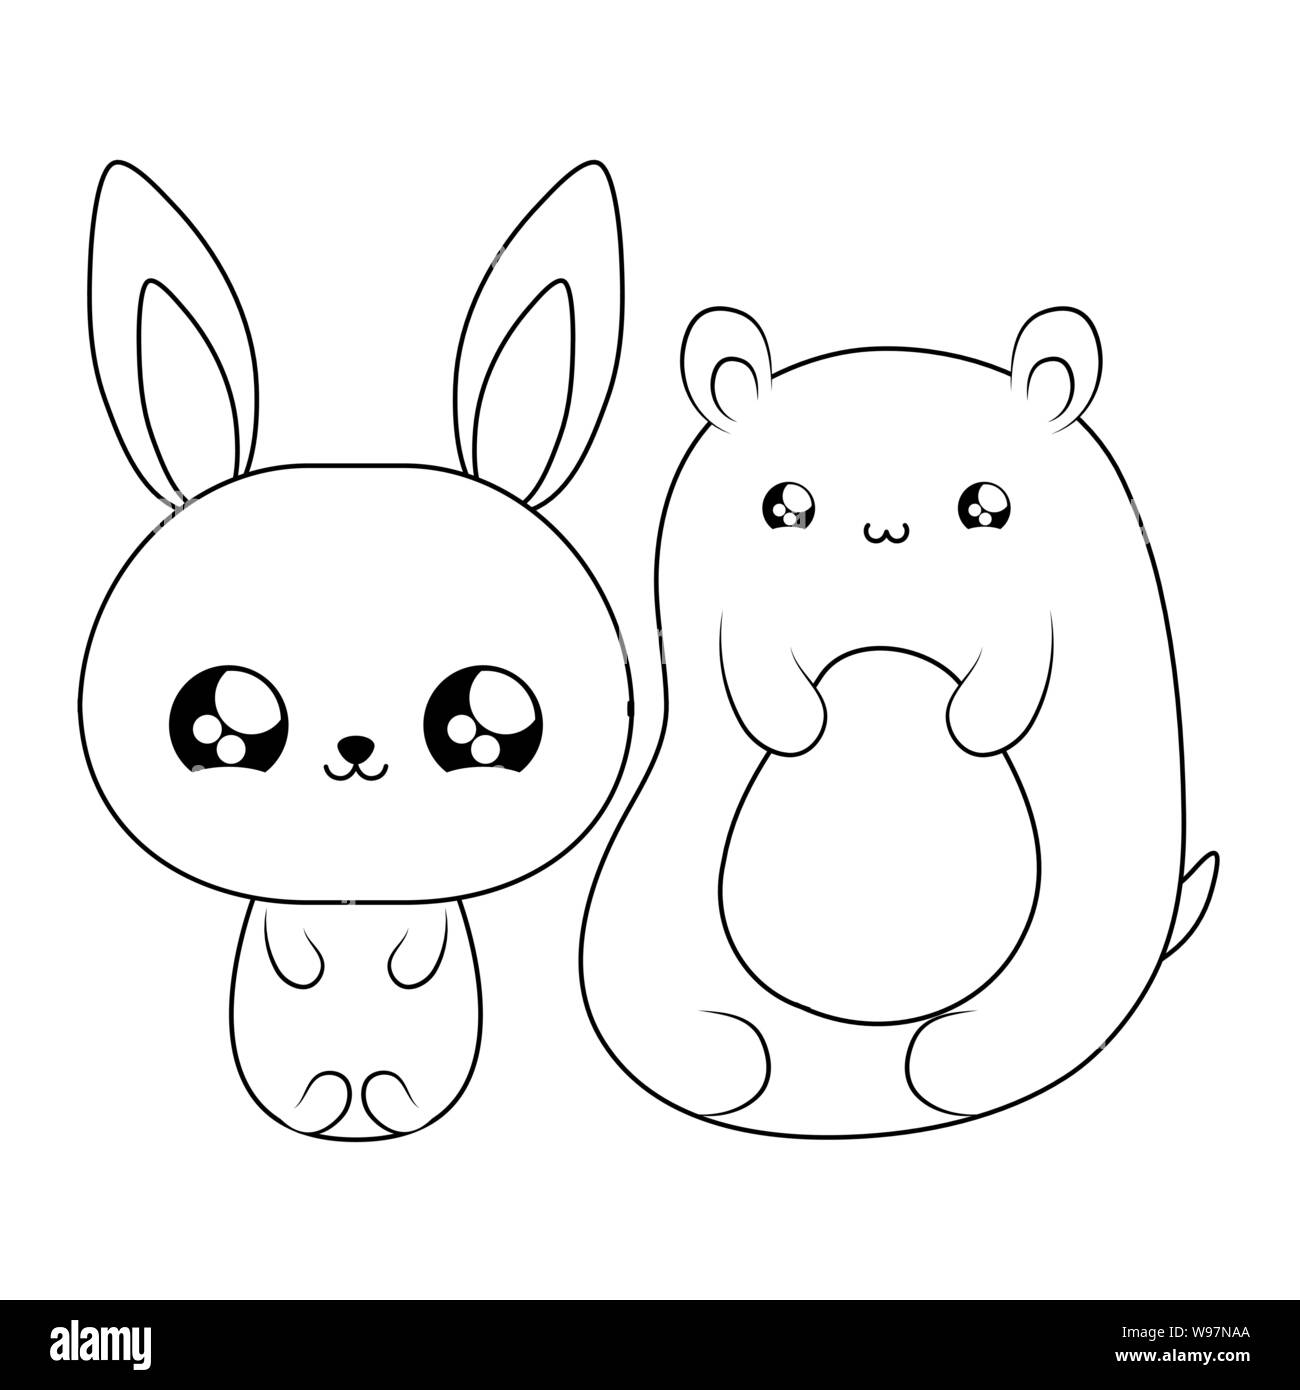 cute bear with bunny baby animals kawaii style vector illustration ...